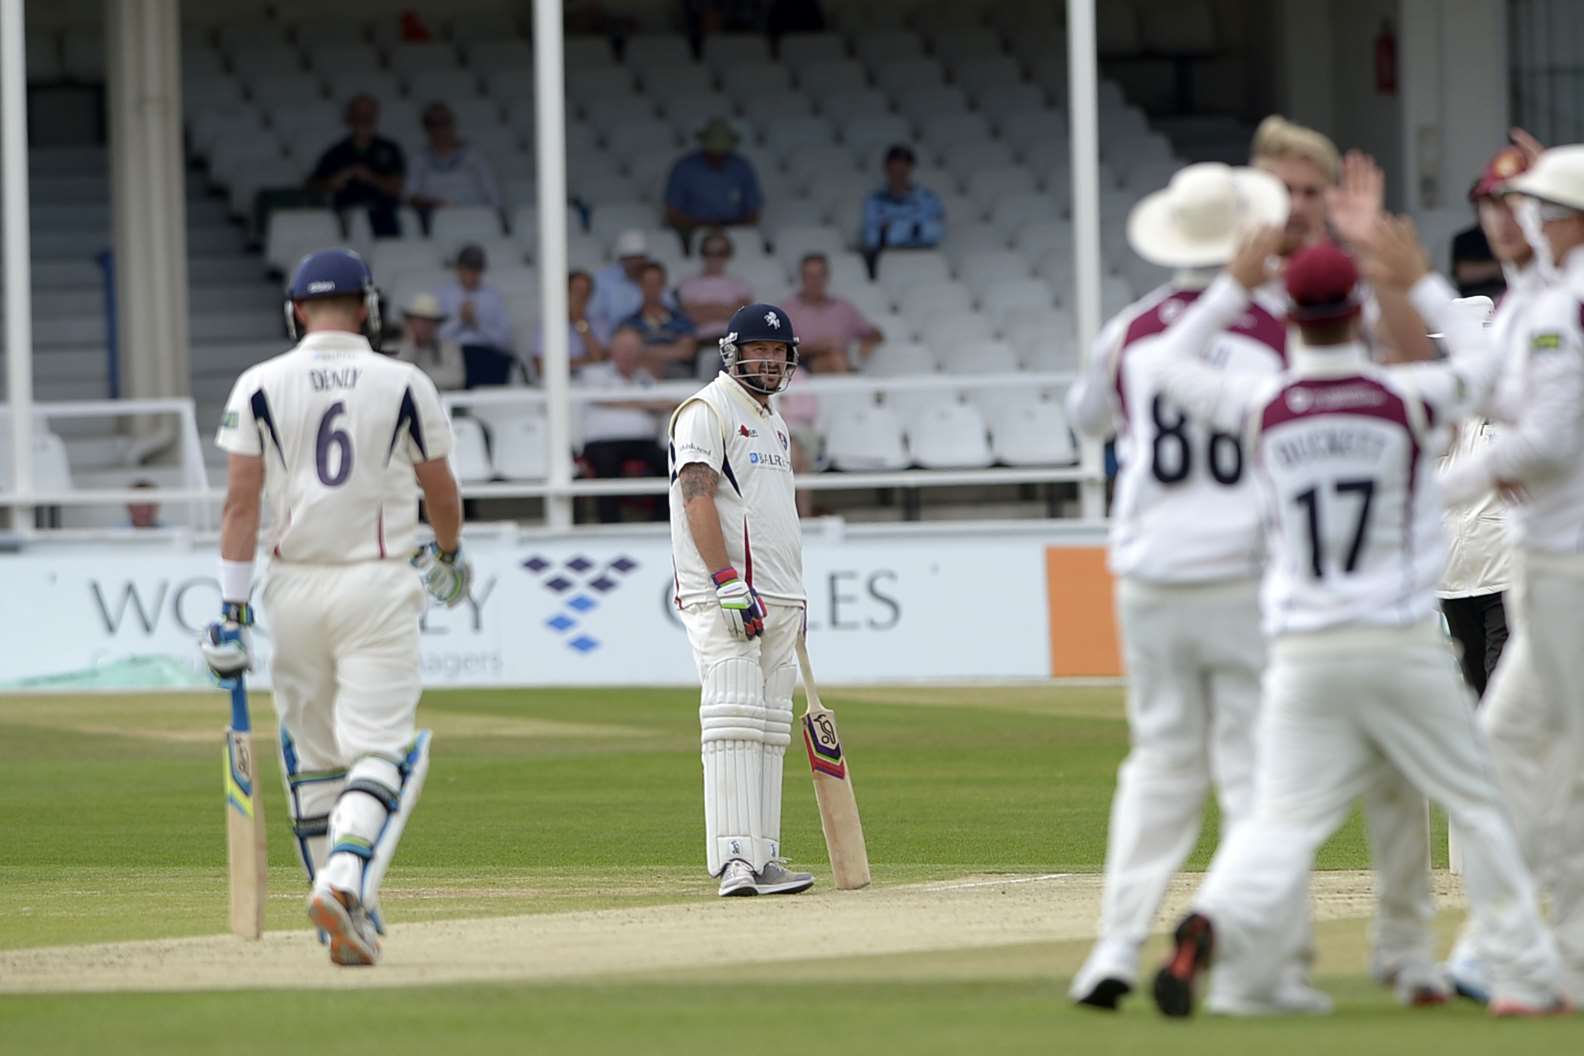 Darren Stevens looks on as Northants celebrate a wicket. Picture: Barry Goodwin